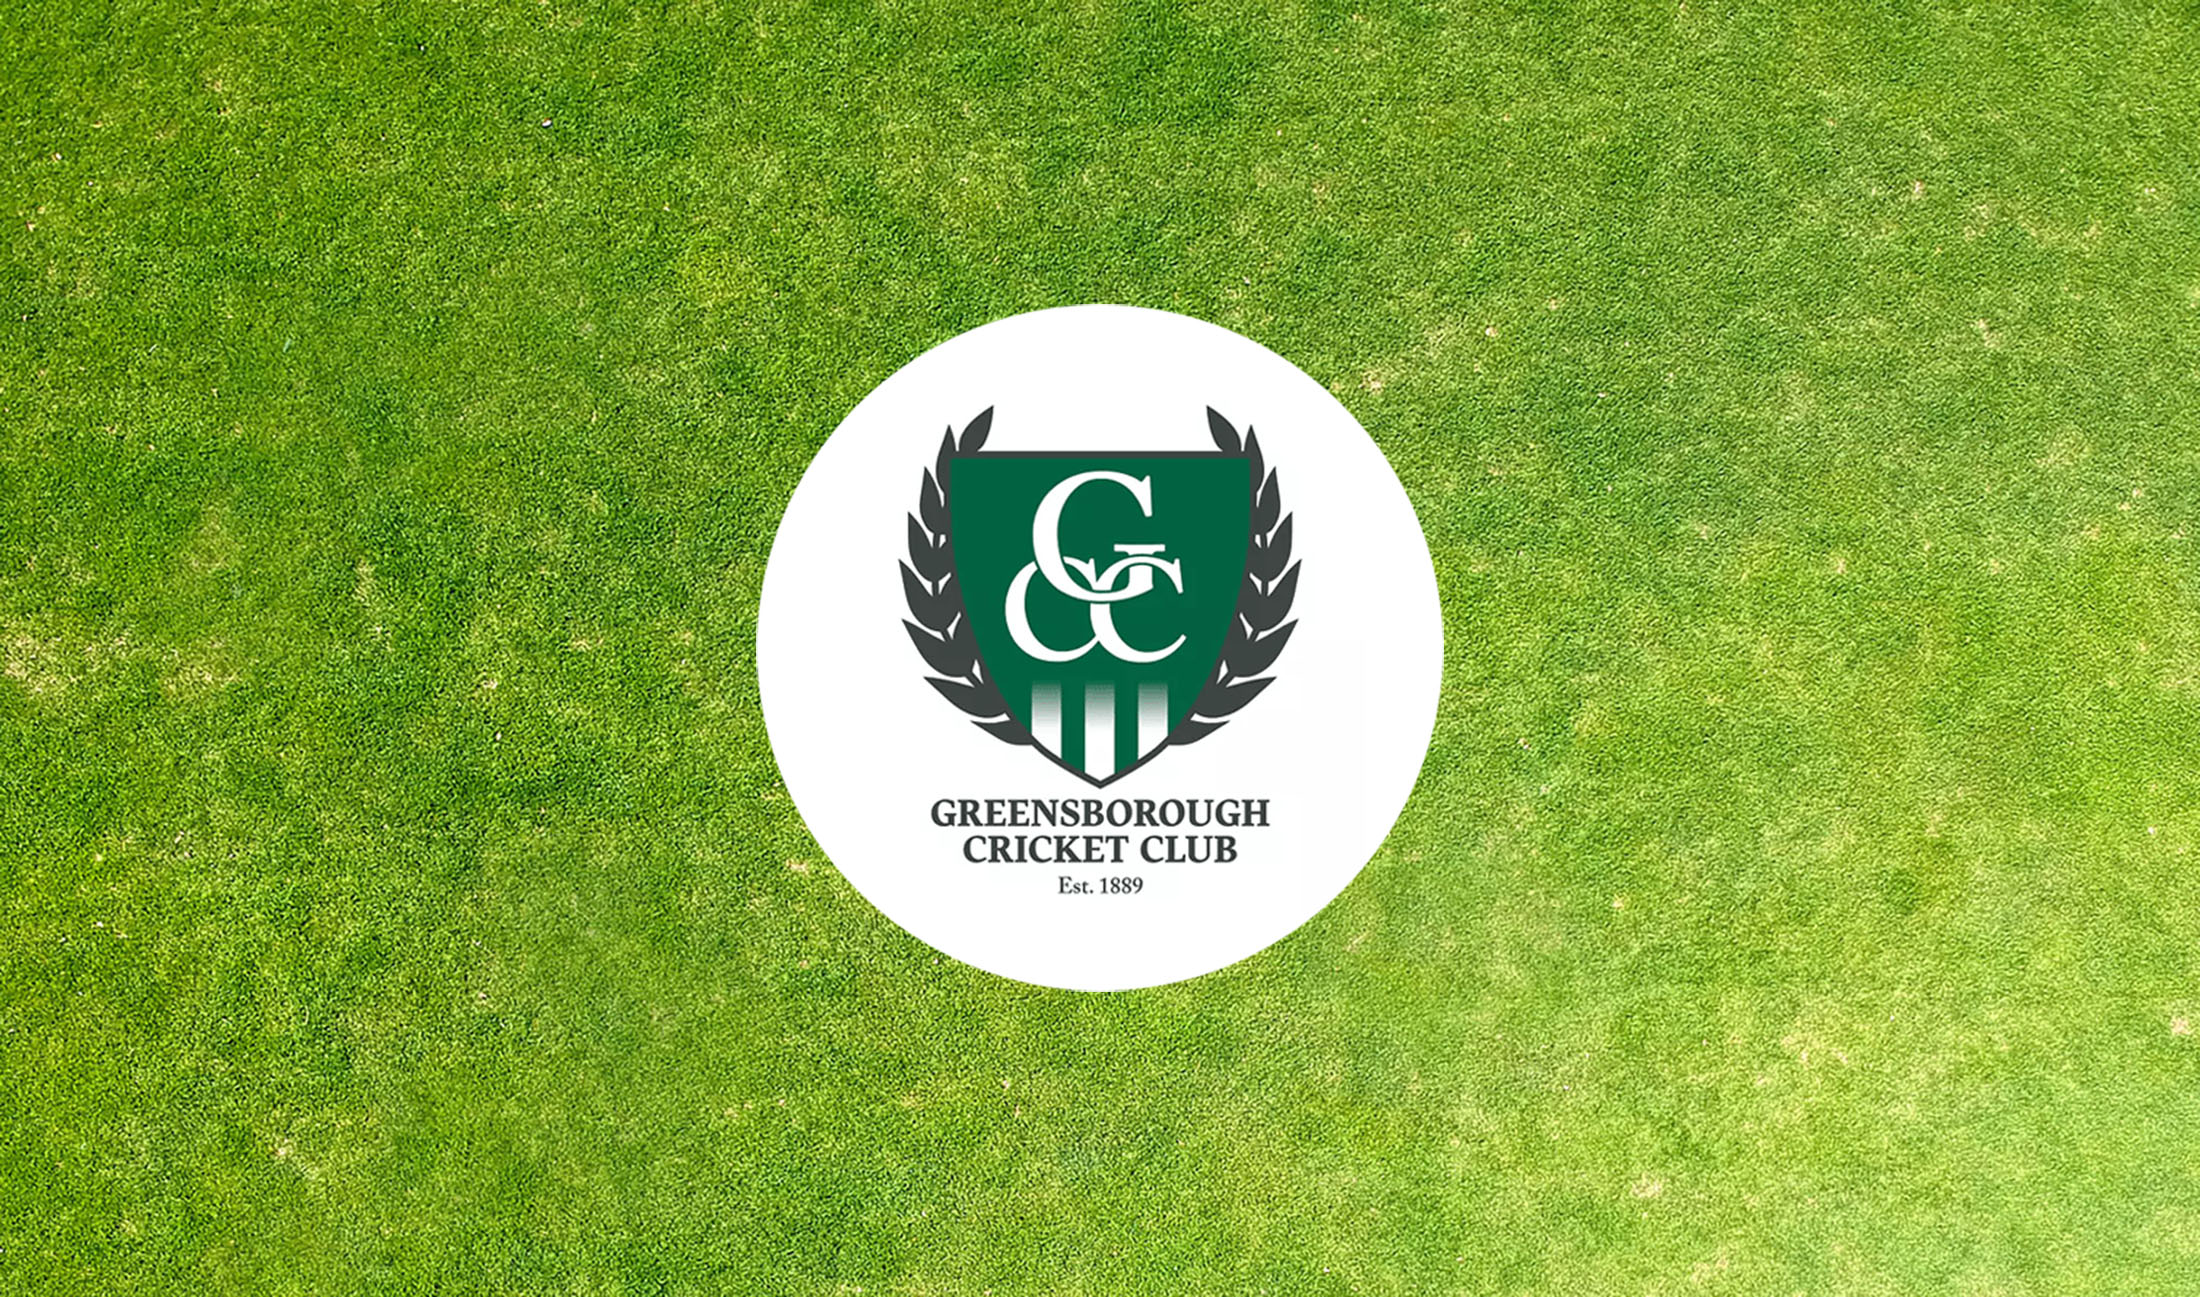 Greensborough Cricket Club seeking Senior Women’s Coach for season 2022/23